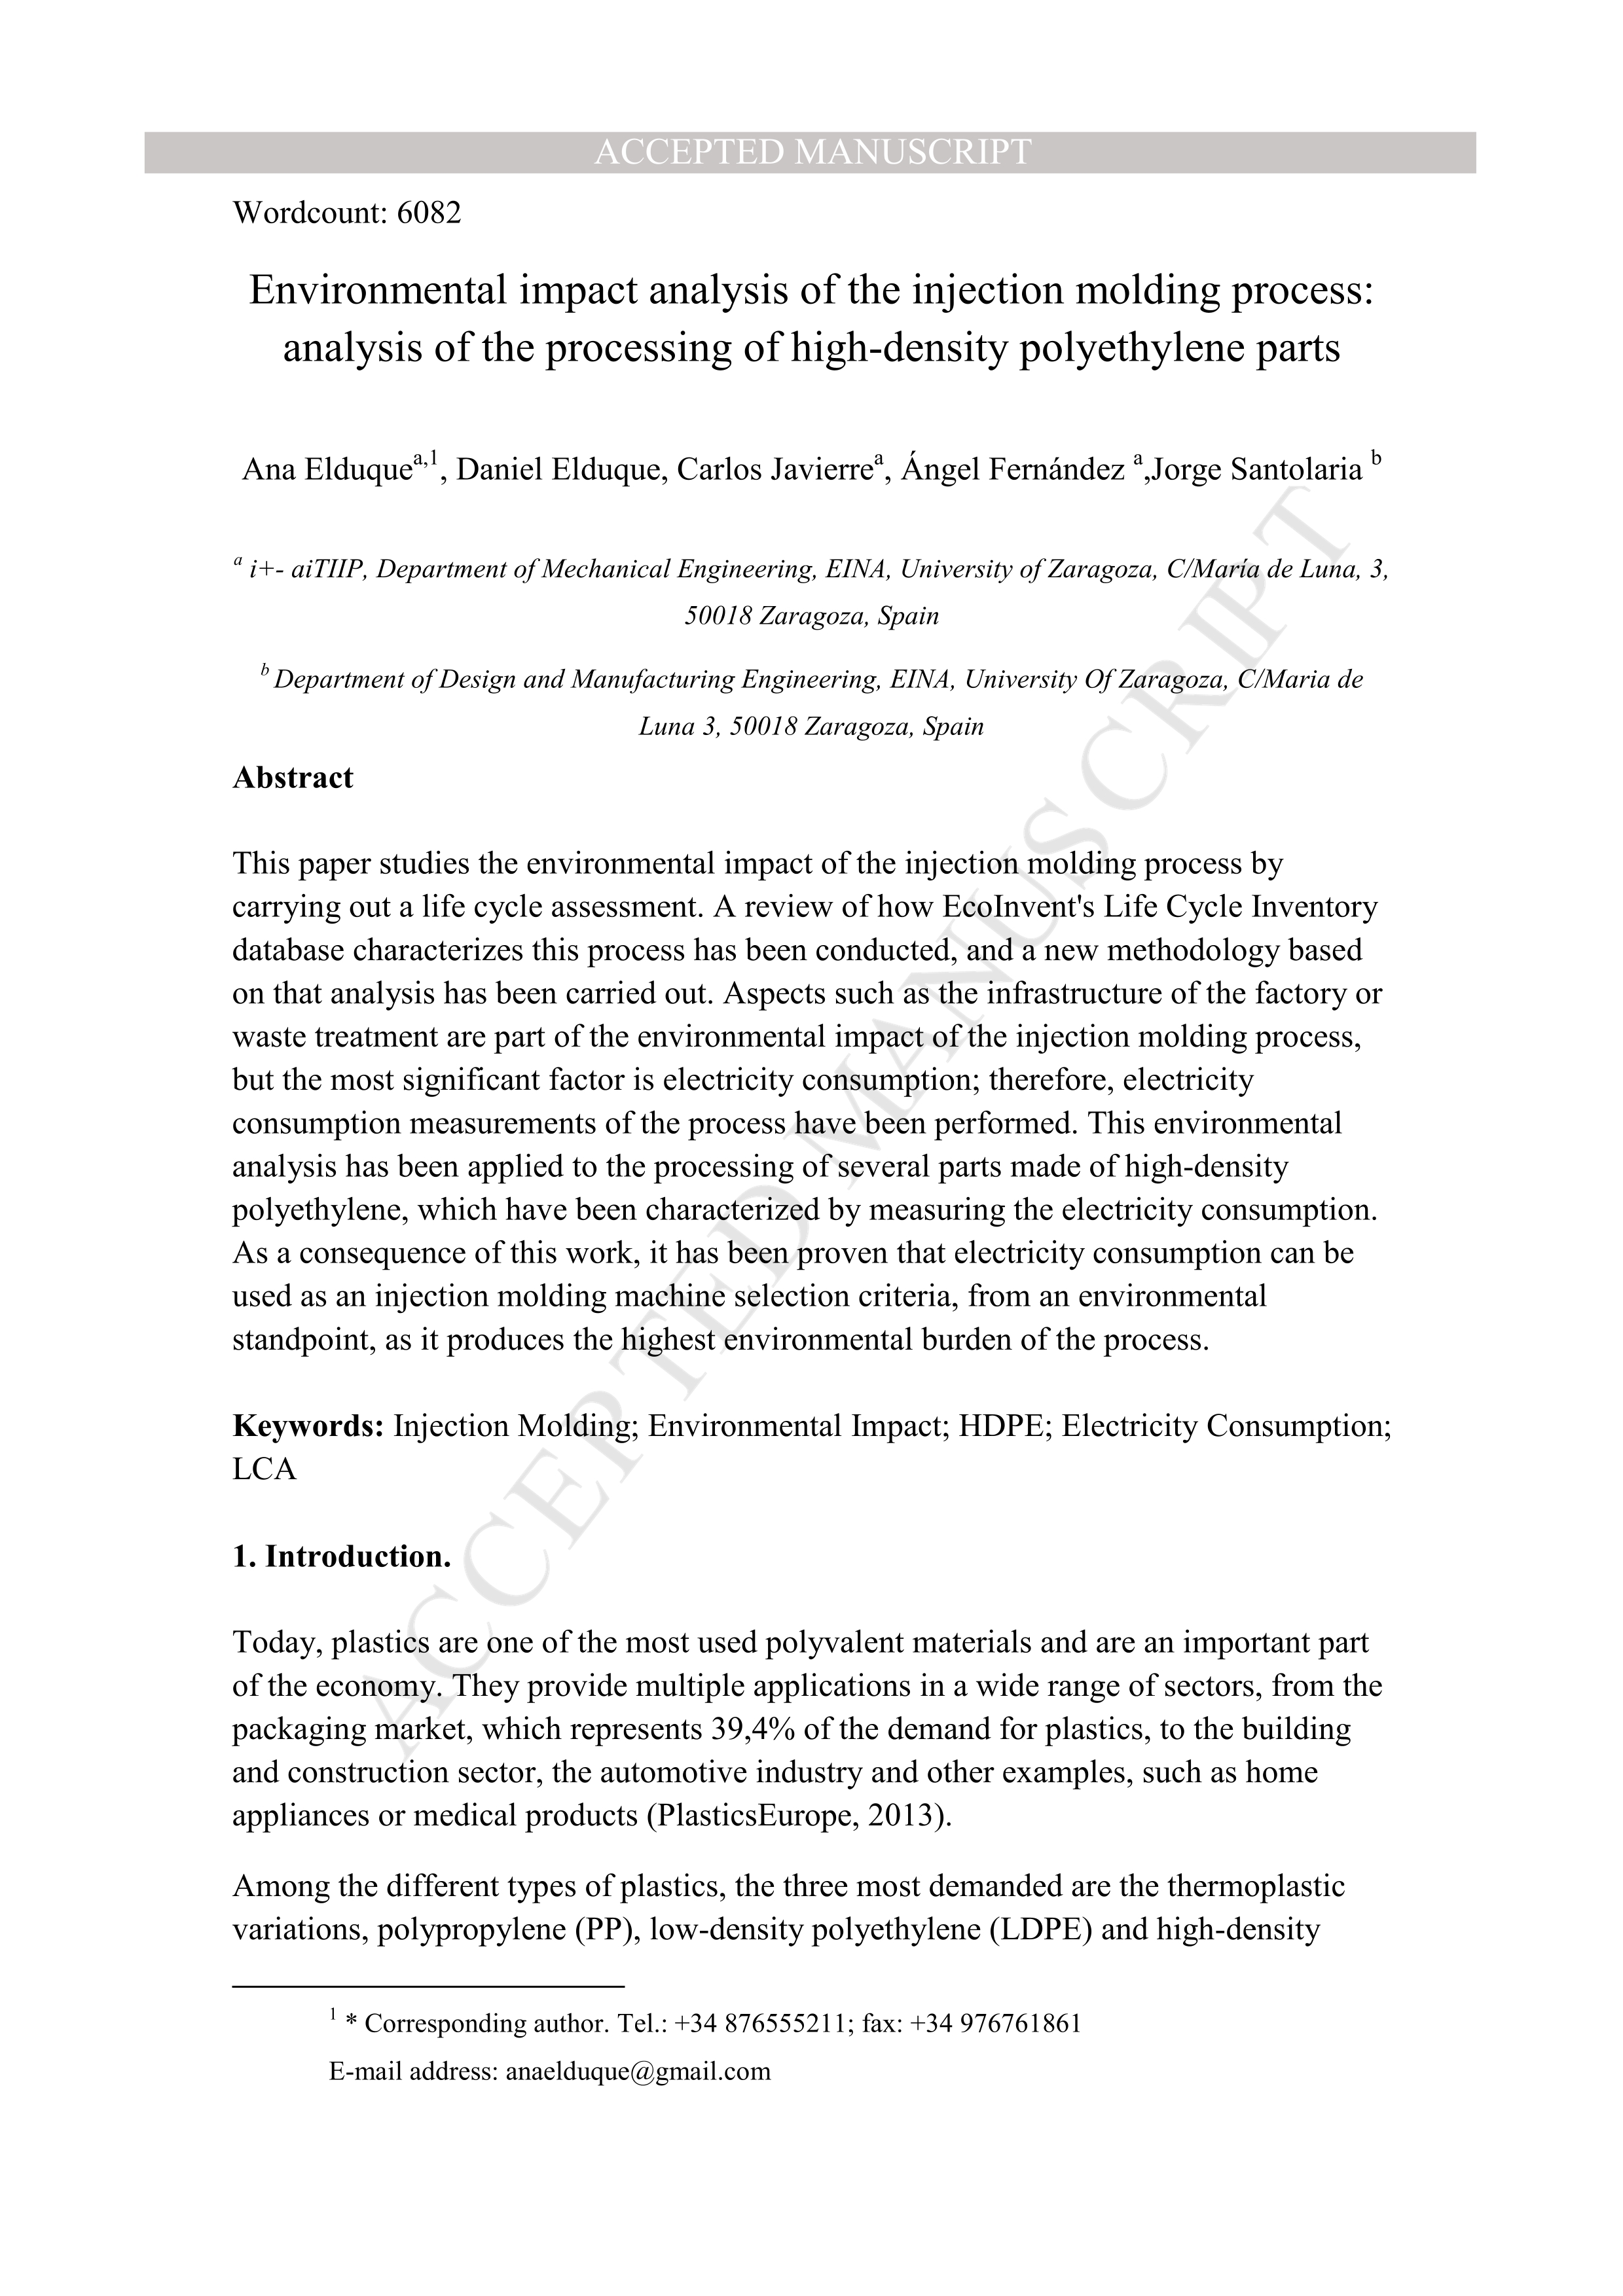 Environmental impact analysis of the injection molding process: Analysis of the processing of high-density polyethylene parts